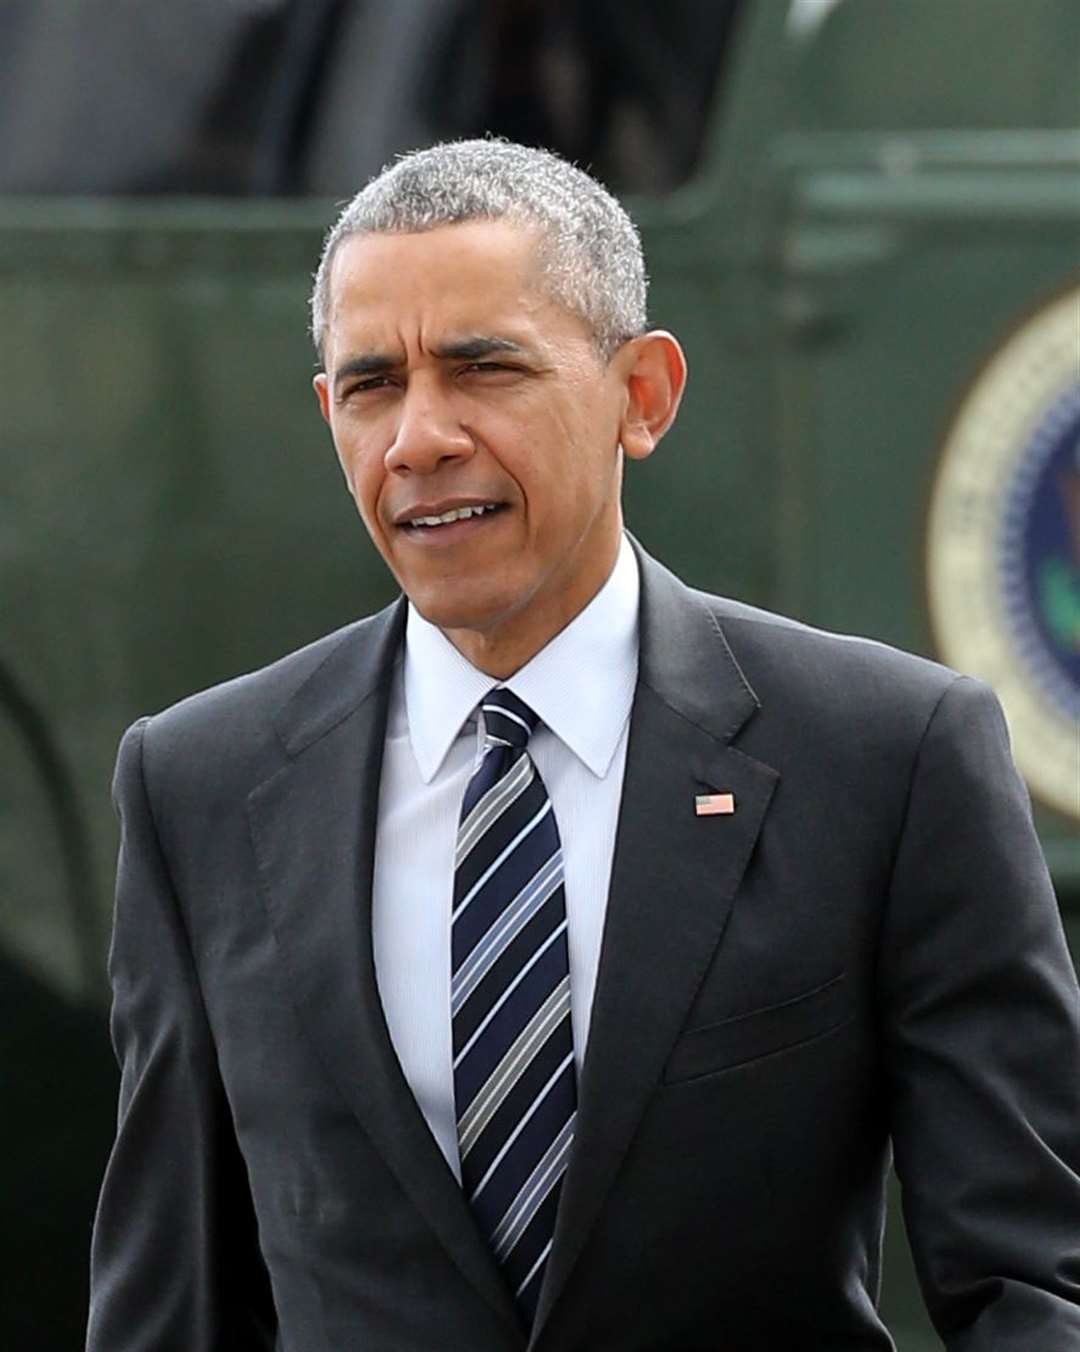 Barack Obama initiated a withdrawal of US troops in 2011 (Chris Radburn/PA)